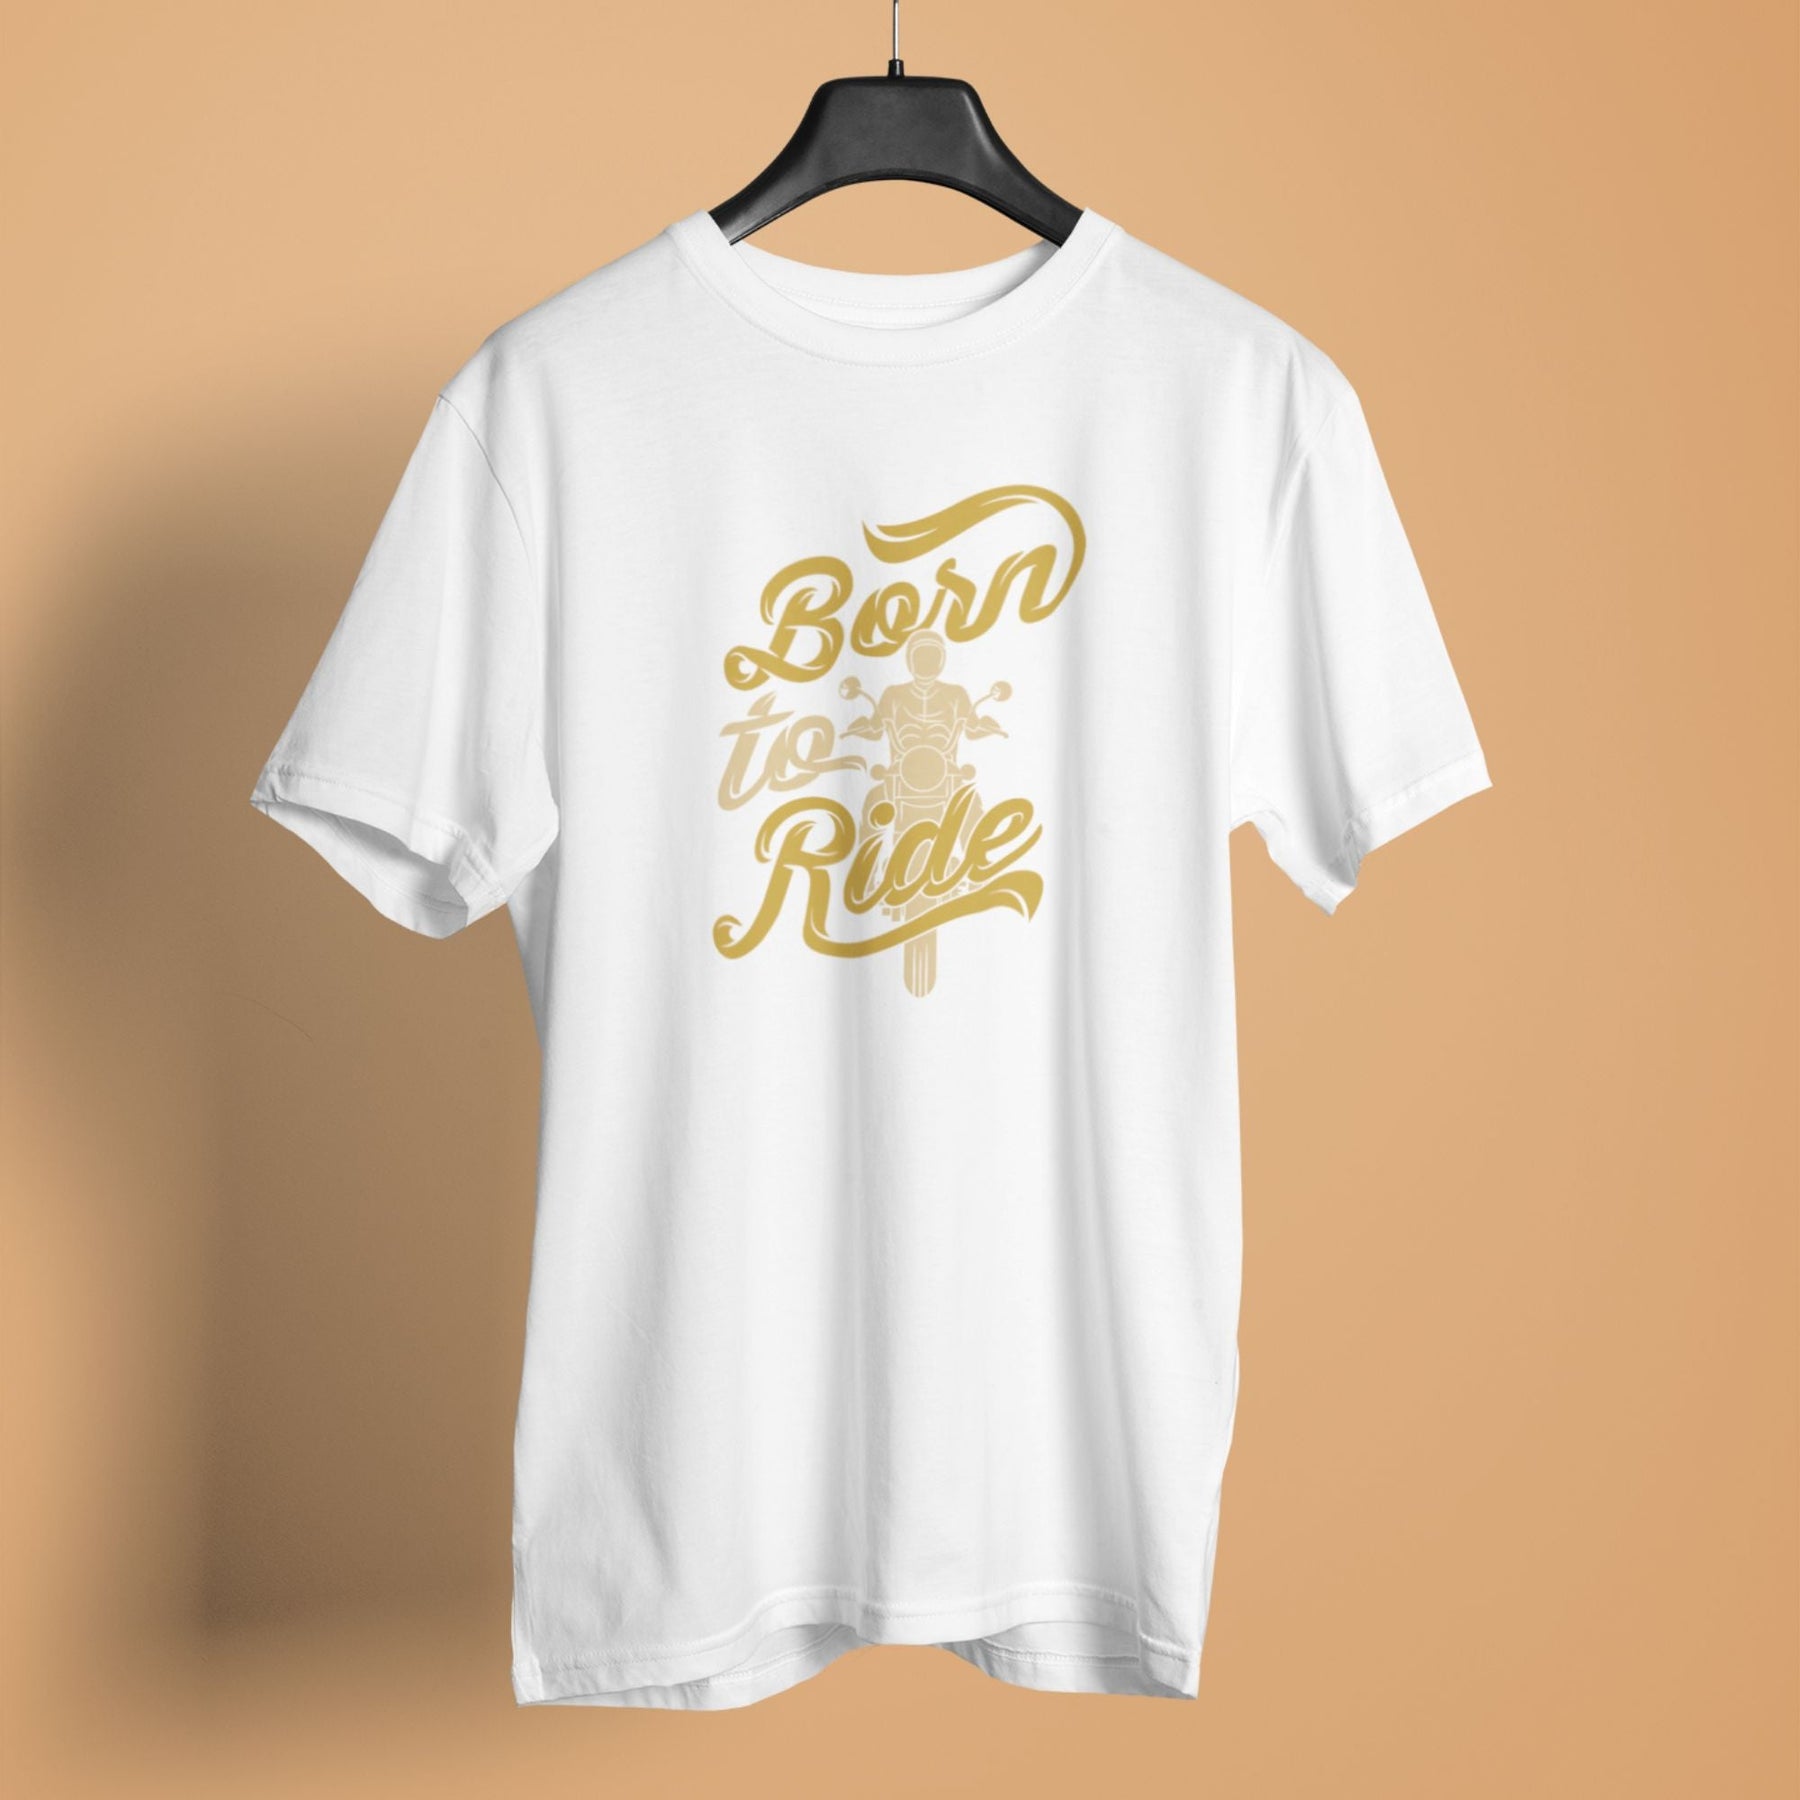 5XL Born to ride t-shirt